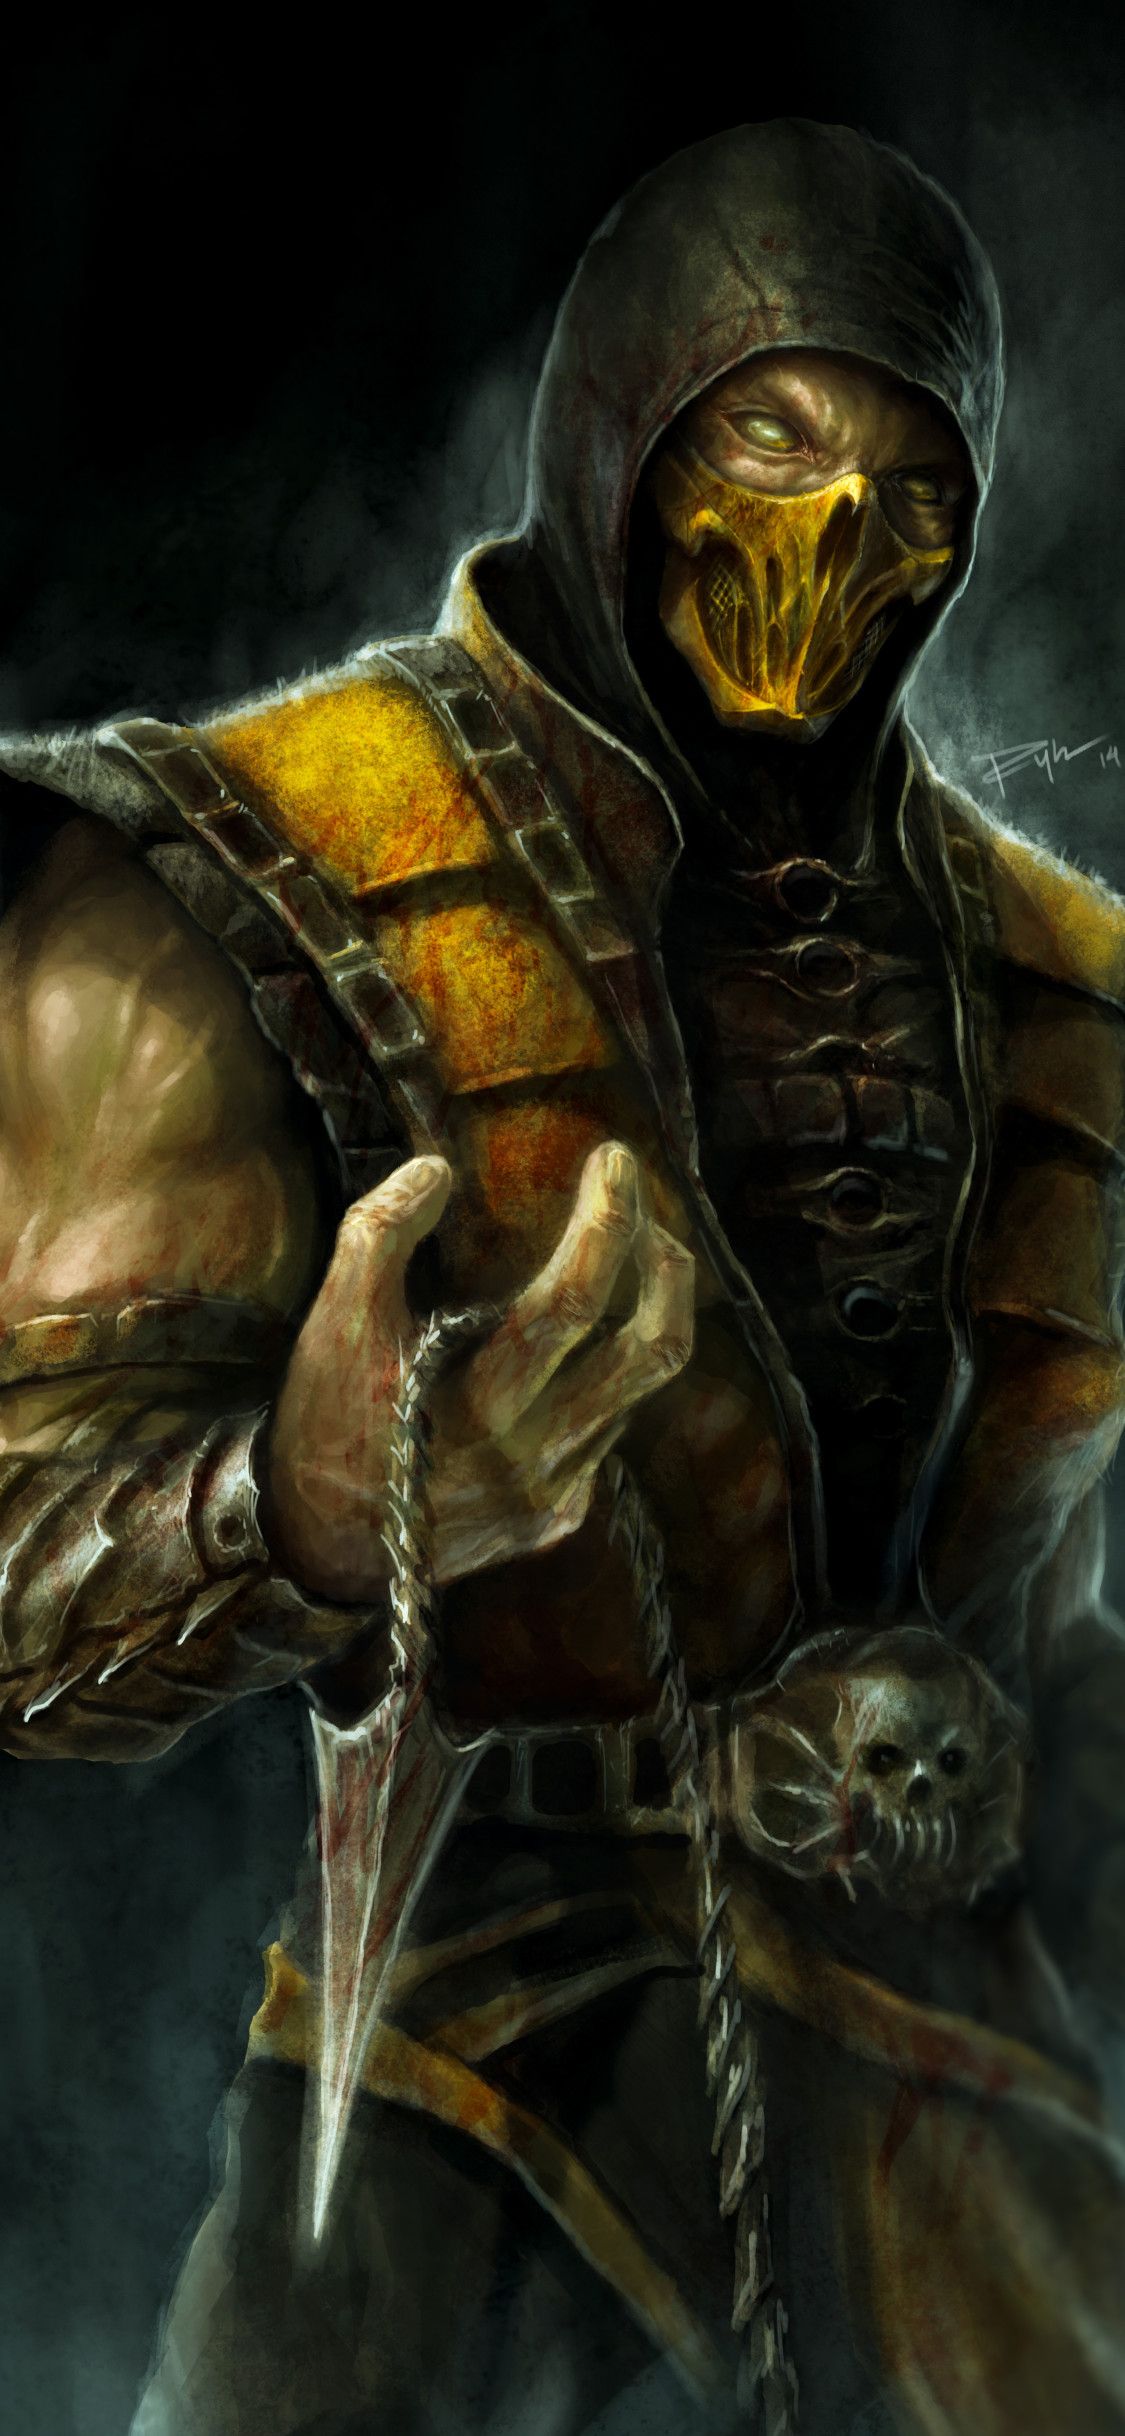 Scorpion Mortal Kombat X 4k Artwork iPhone XS, iPhone 10